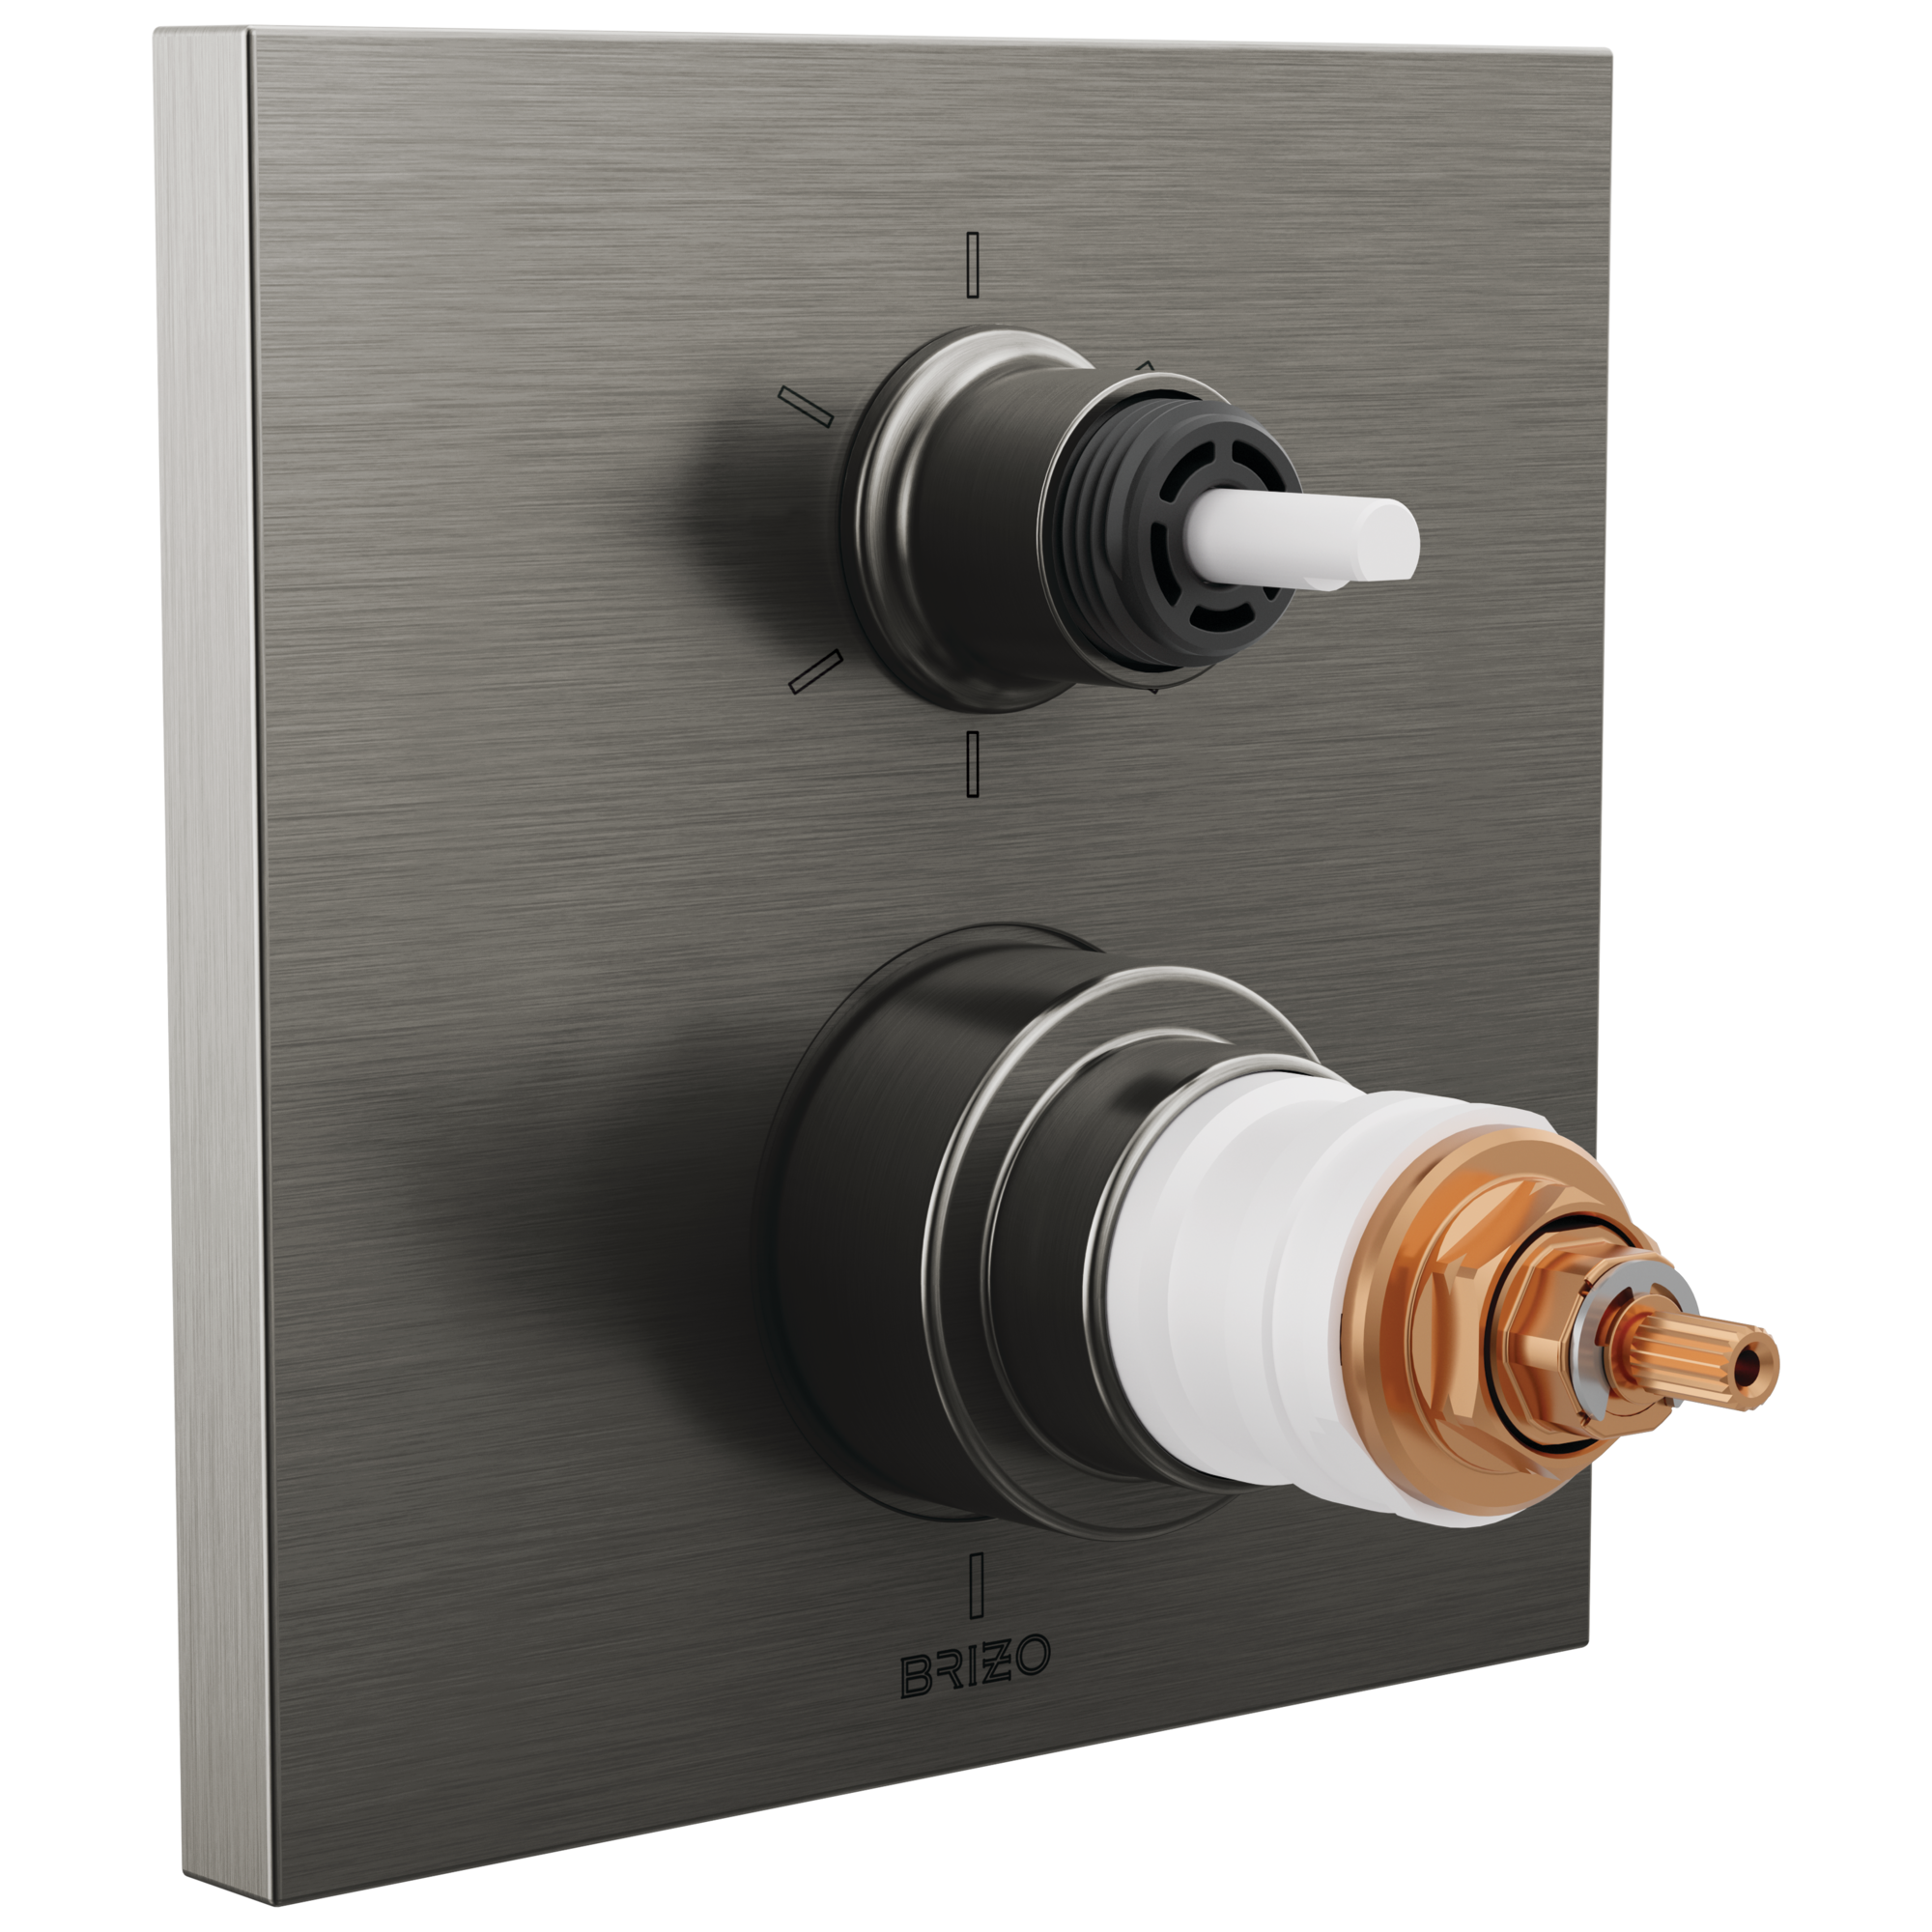 Brizo Frank Lloyd Wright TempAssure Thermostatic Valve with 6-Function Integrated Diverter Trim - Less Handles